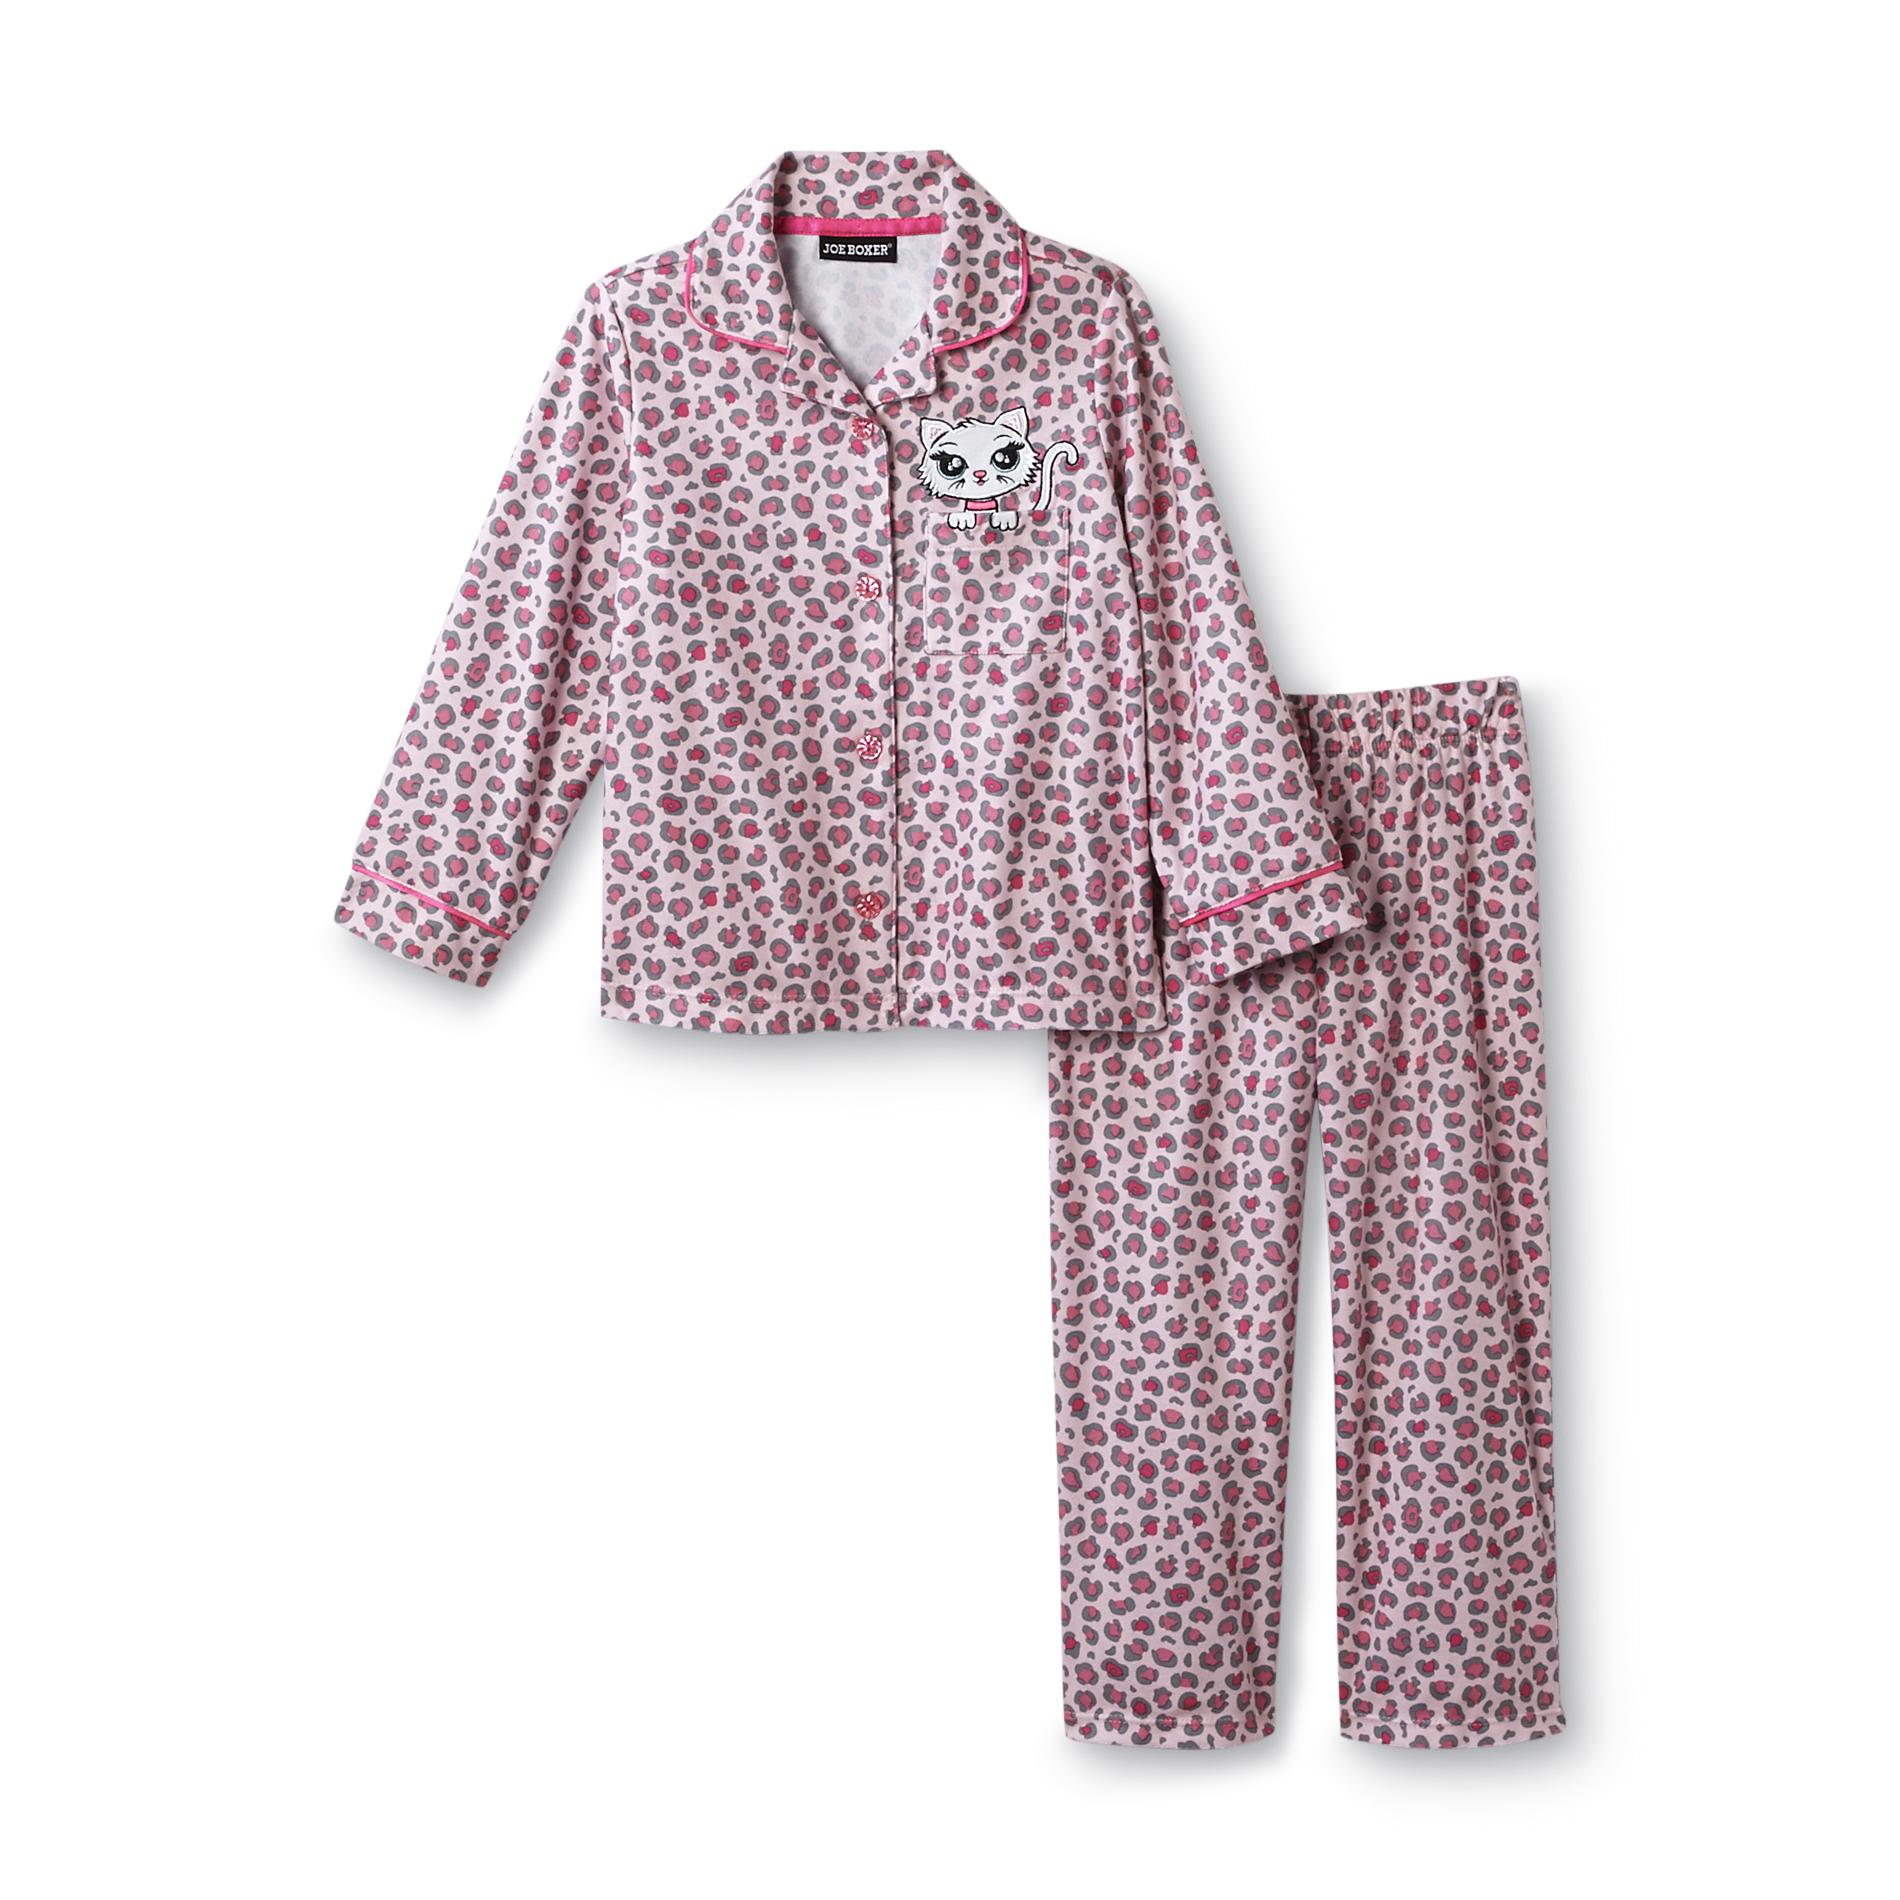 Joe Boxer Toddler Girl's Flannel Pajamas - Leopard Print